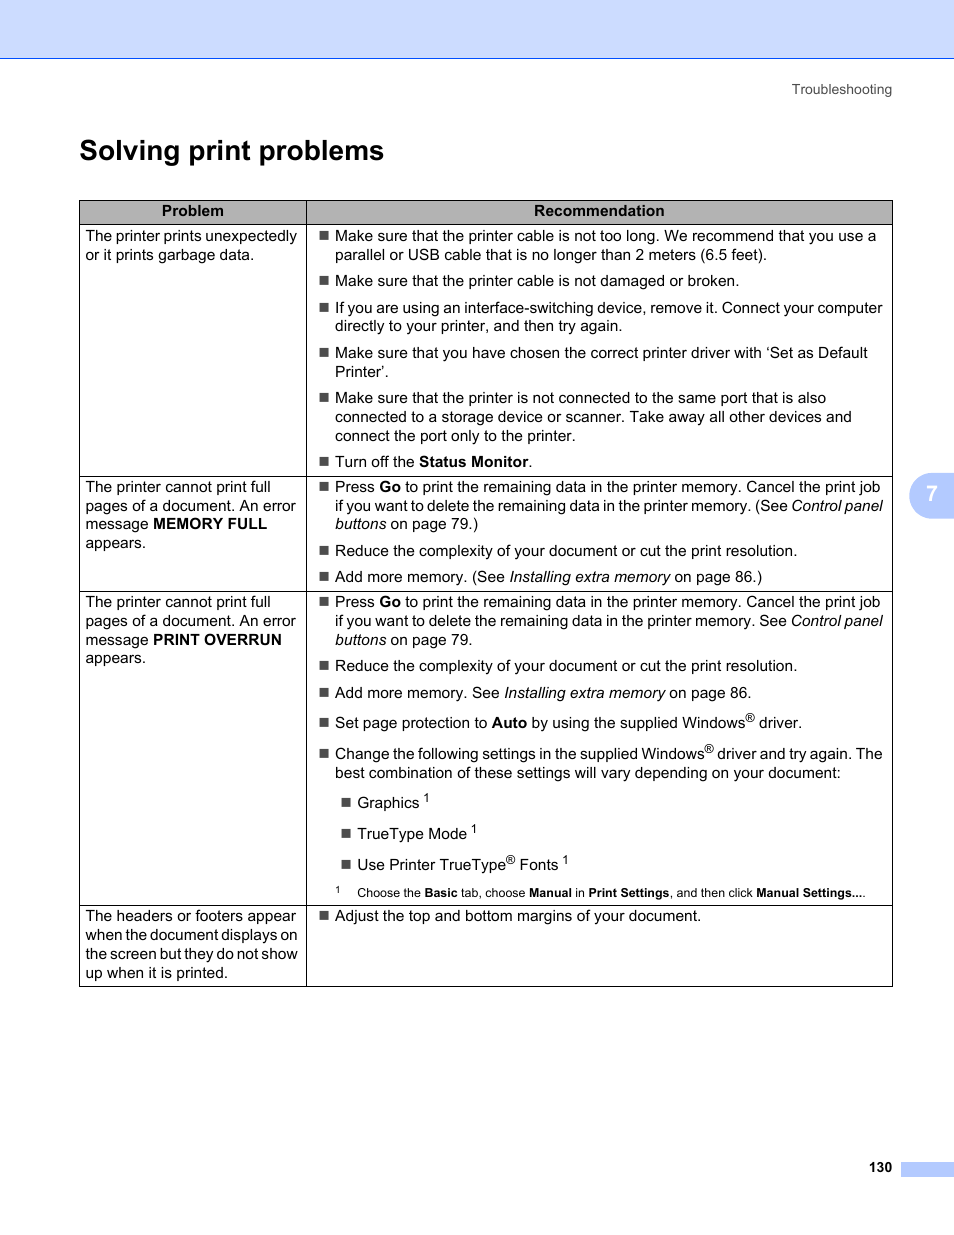 Solving Print Problems Konica Minolta Bizhub 20p User Manual Page 140 161